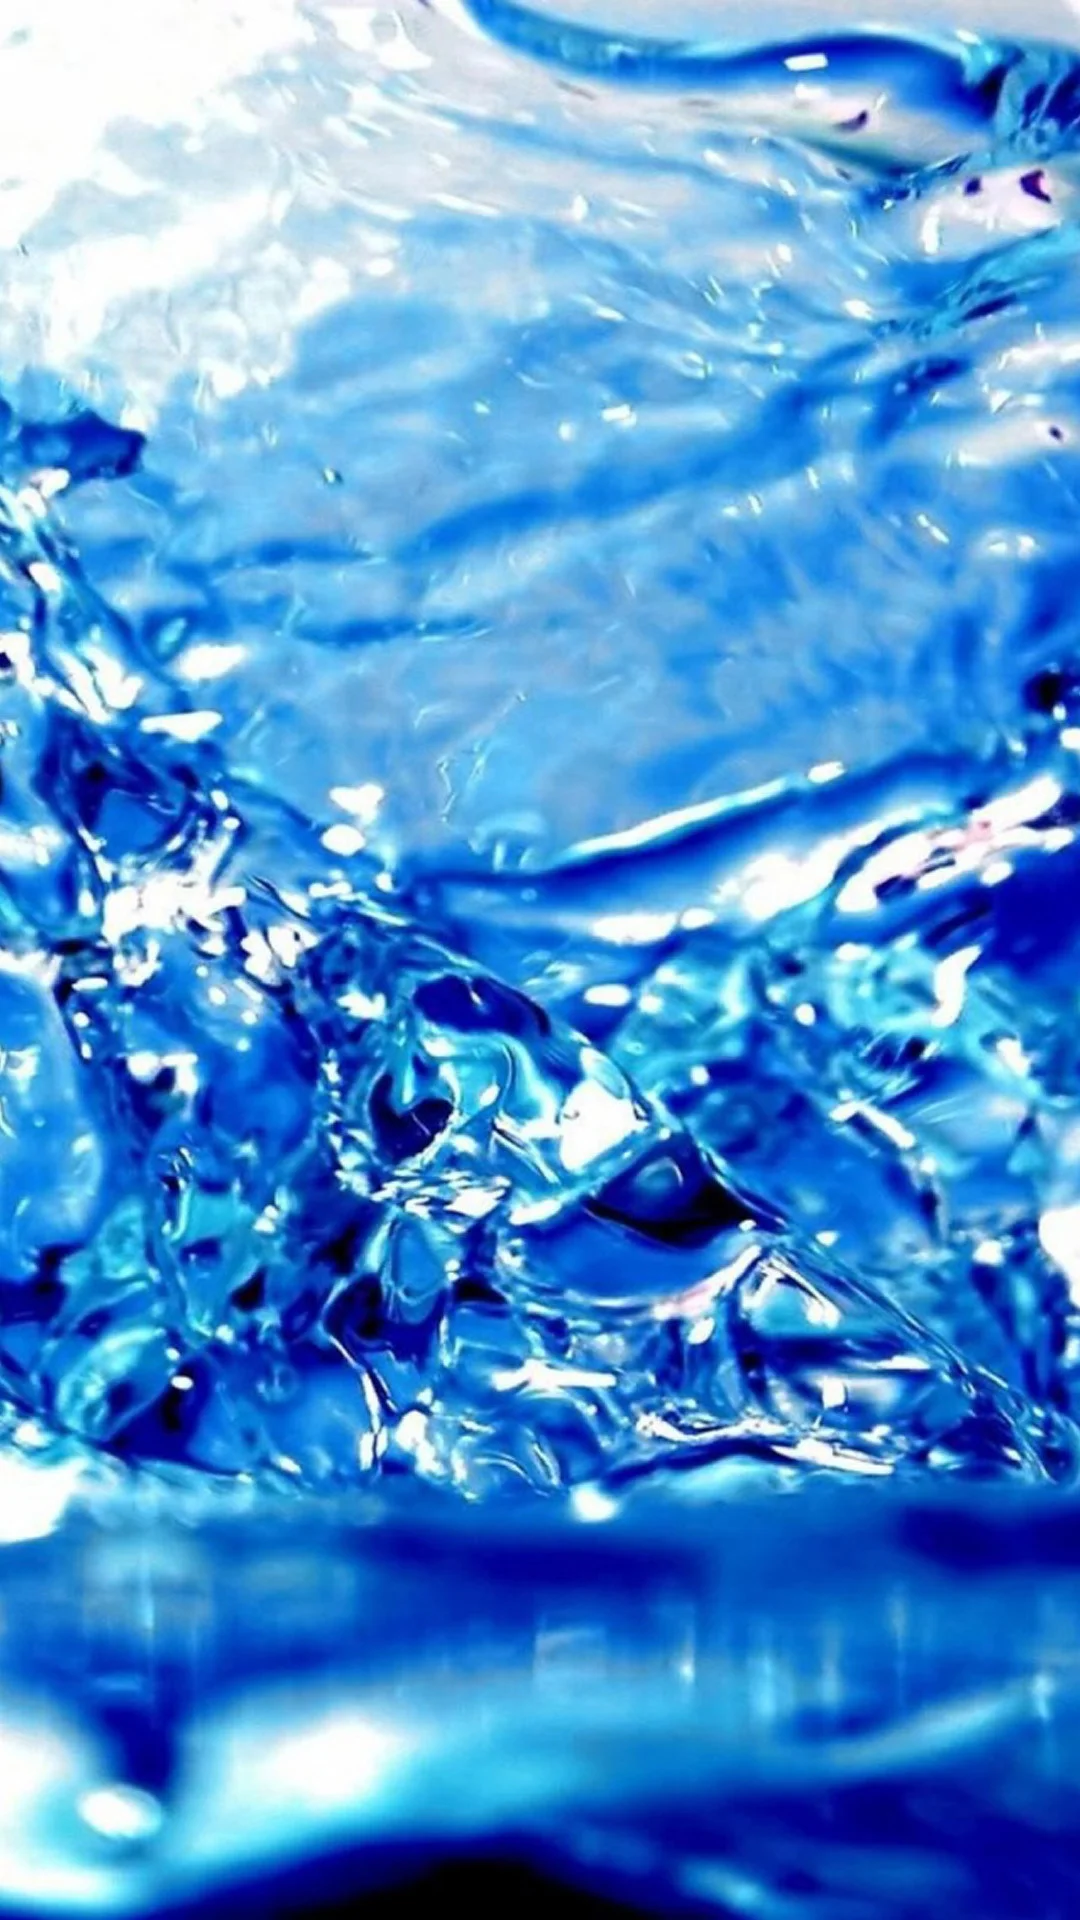 Blue Water Splash Background iPhone 6 wallpaper